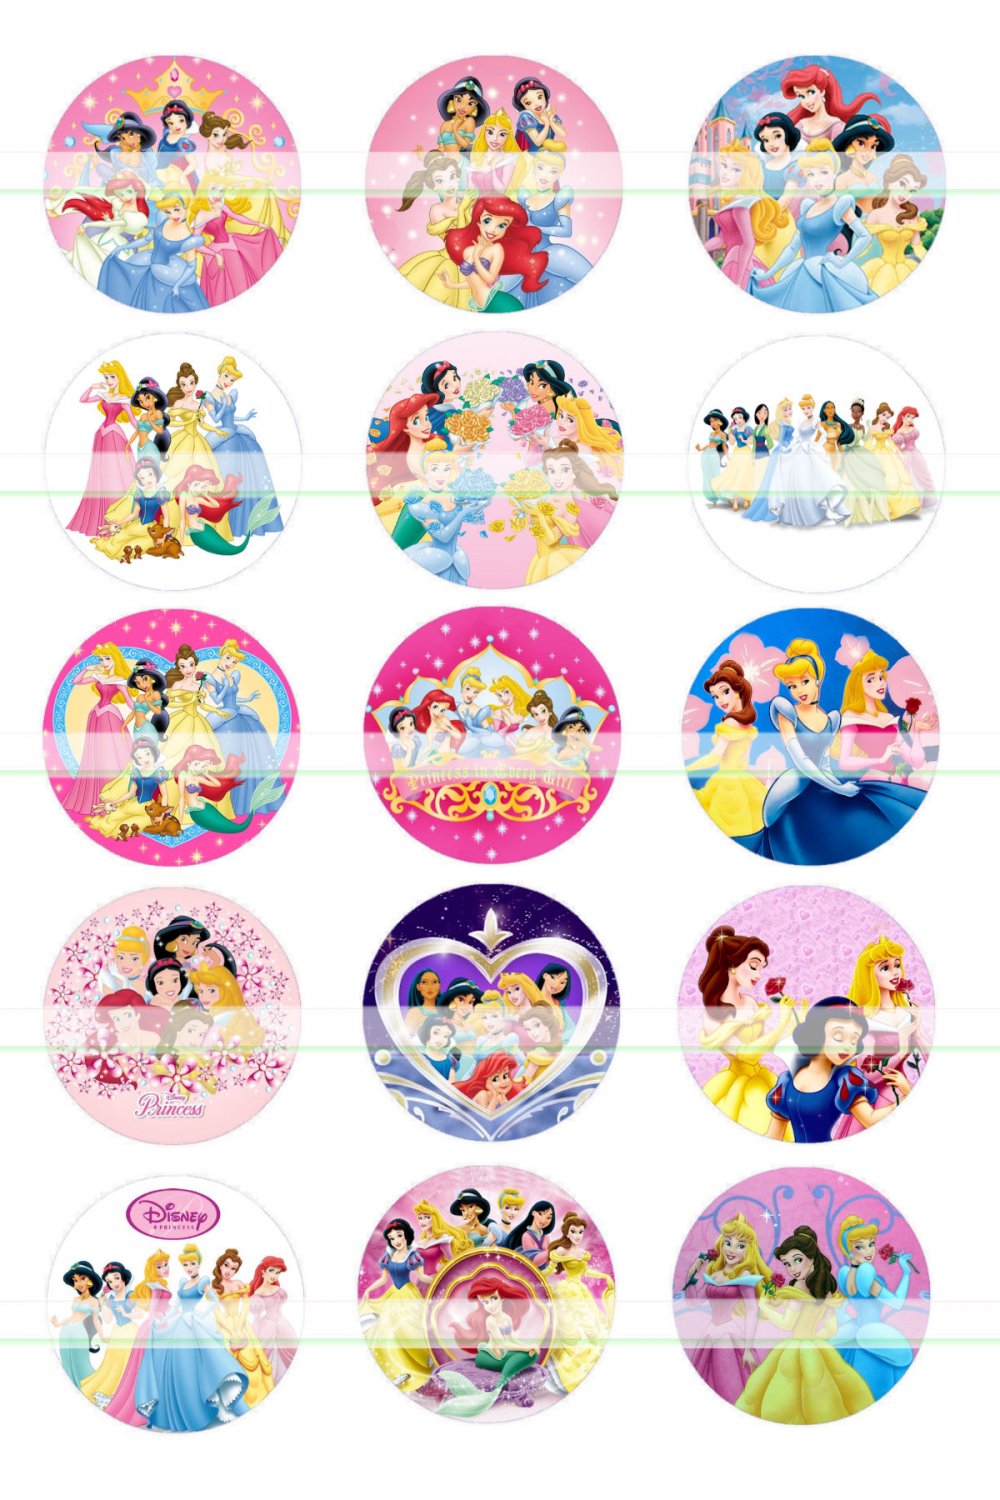 1 inch Disney Princesses bottle cap magnet image sheet (buy 2 get 1 FREE)